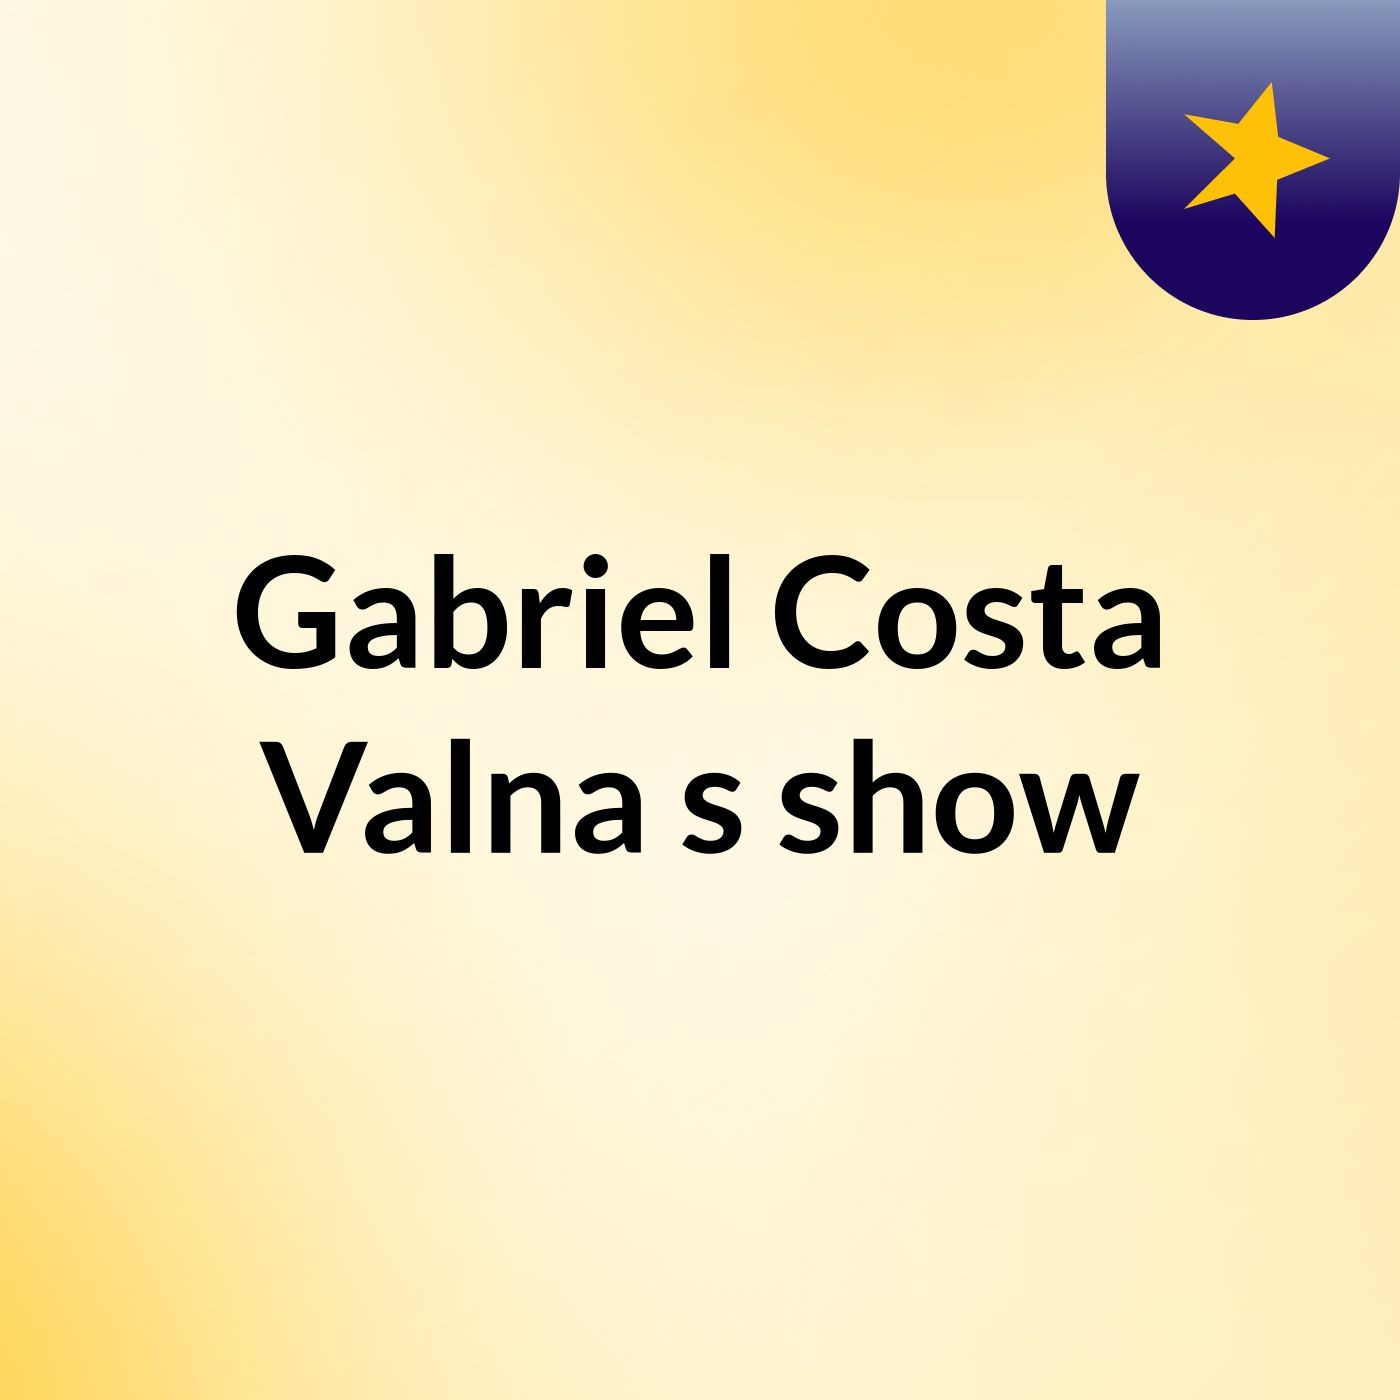 Gabriel Costa Valna's show